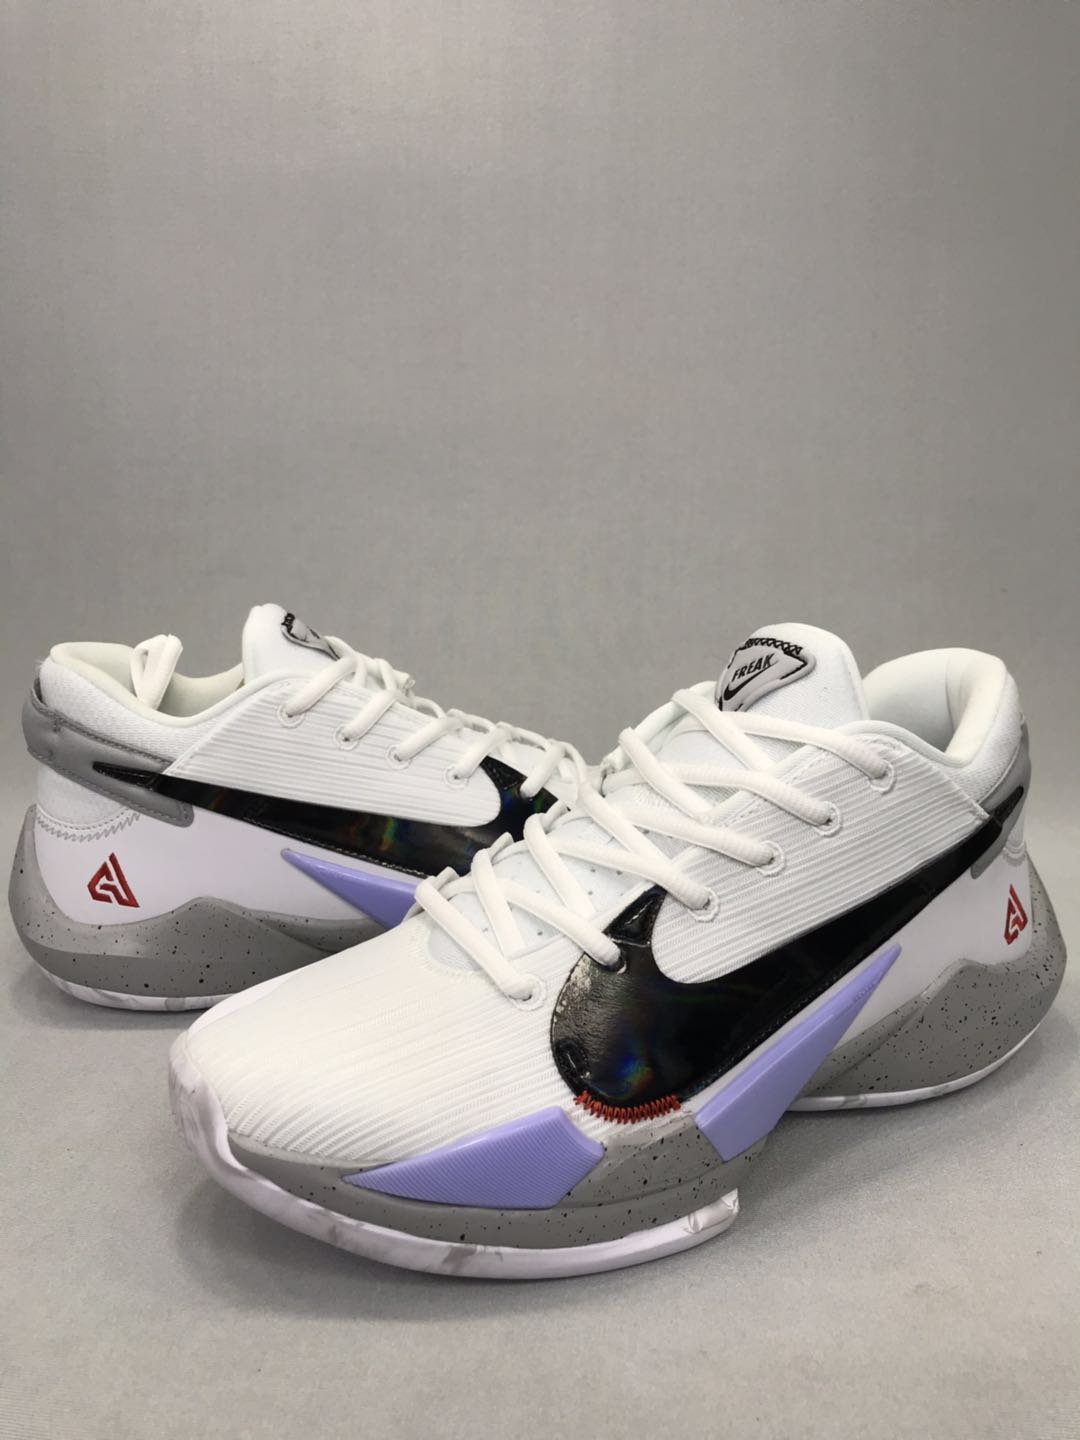 Nike Zoom Freak 2 White Black Purple Cement Shoes